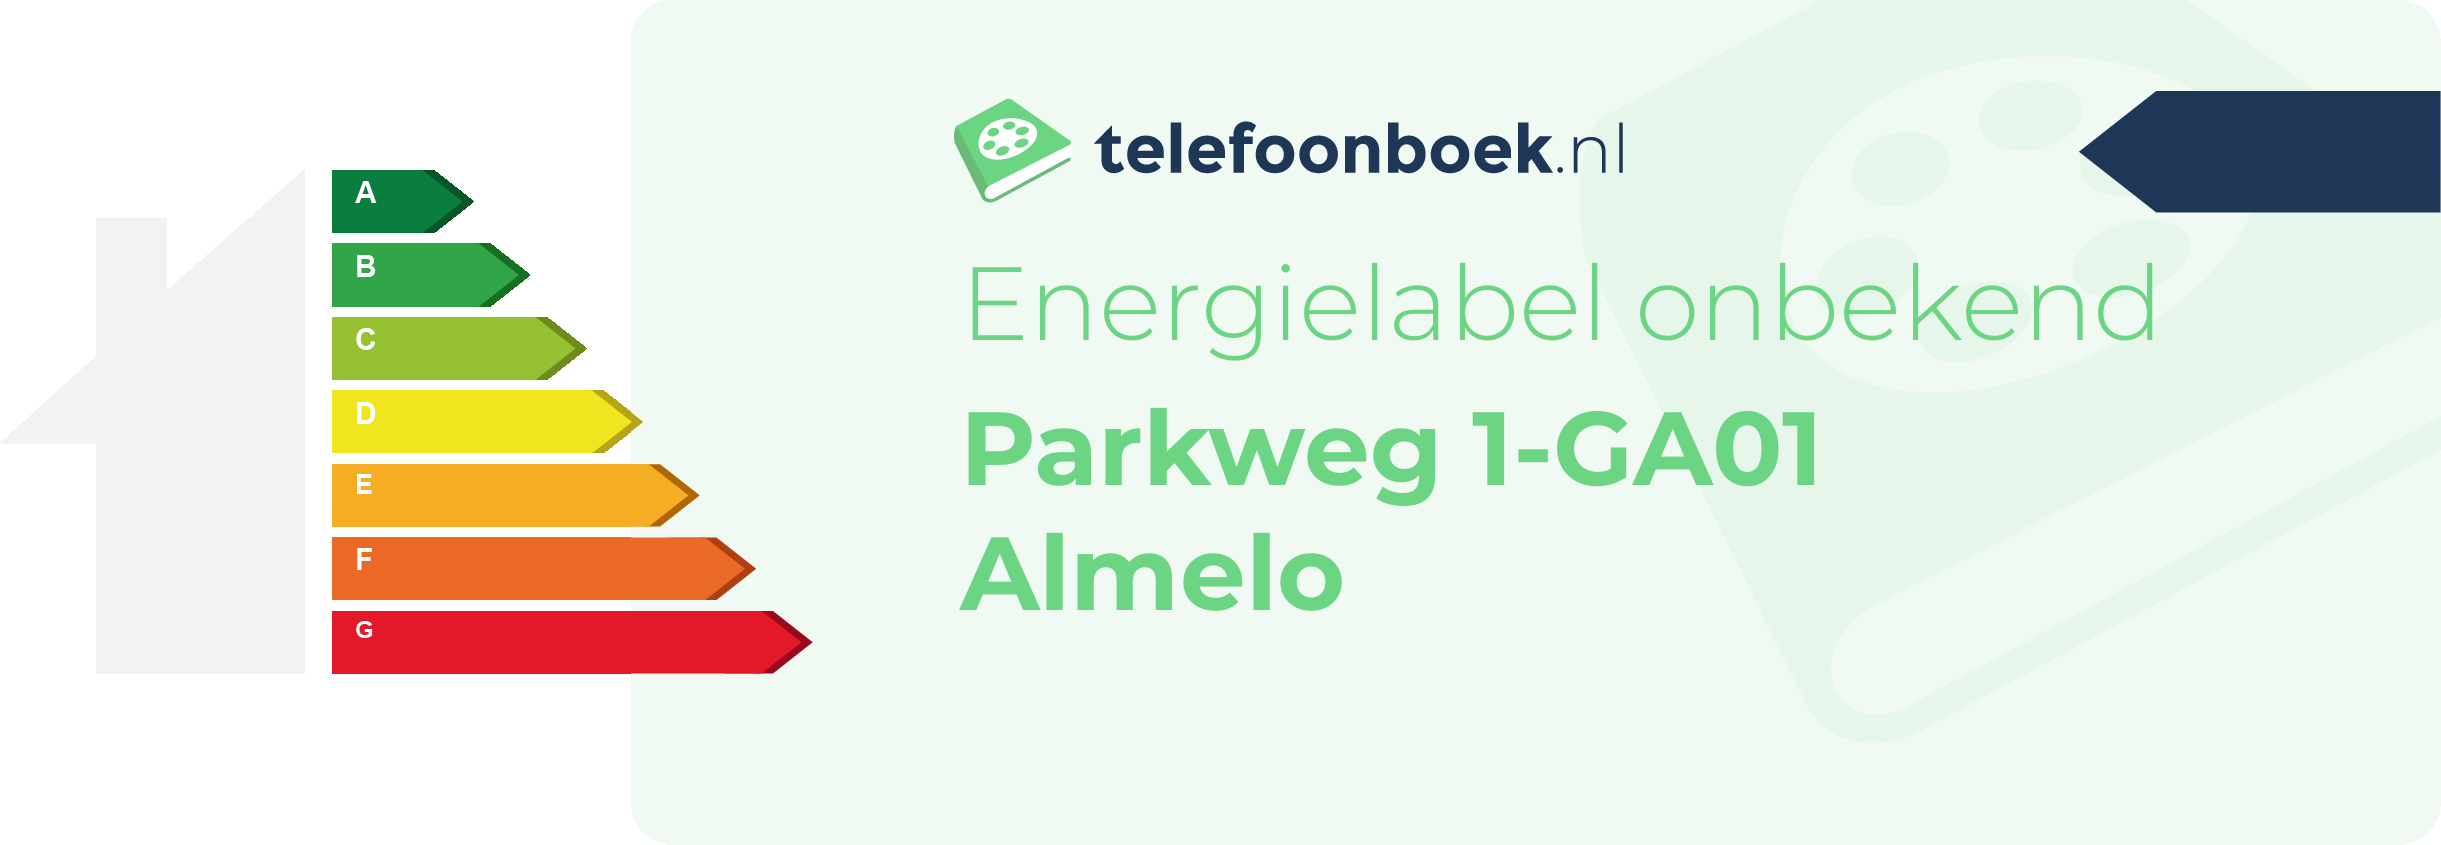 Energielabel Parkweg 1-GA01 Almelo